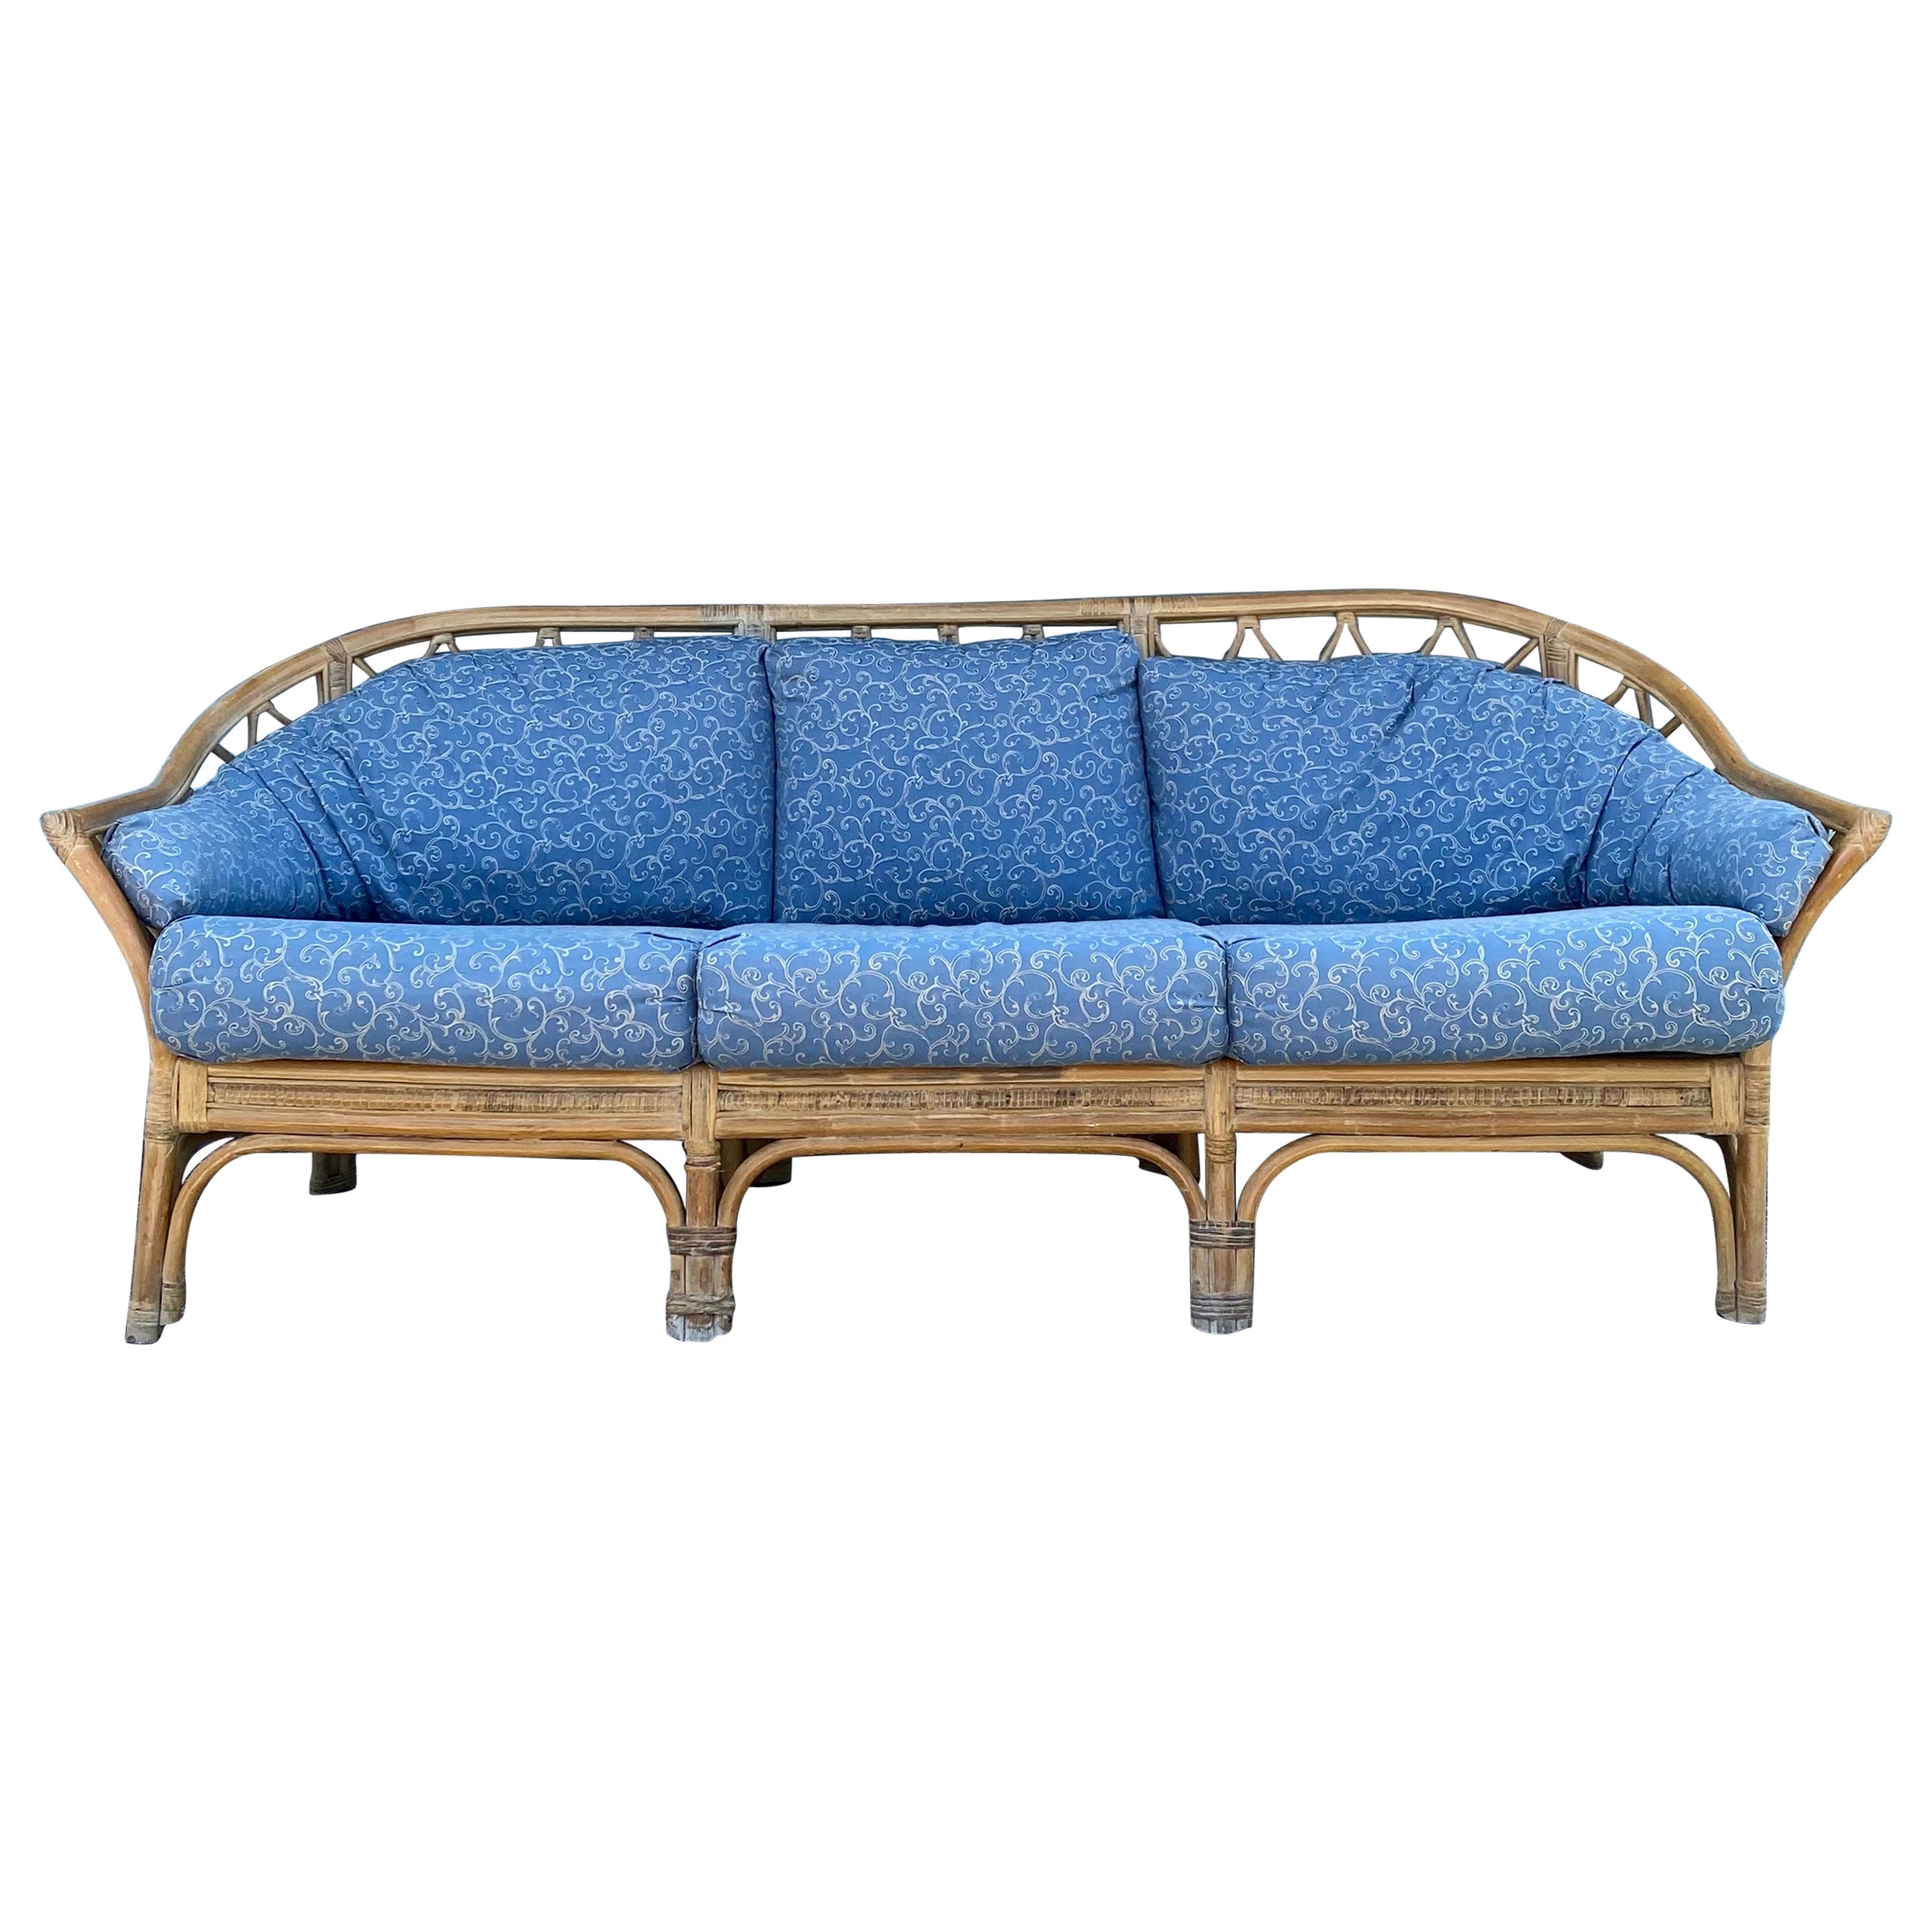 1970s Curved Sculptural Rattan Denim Blue Sofa For Sale